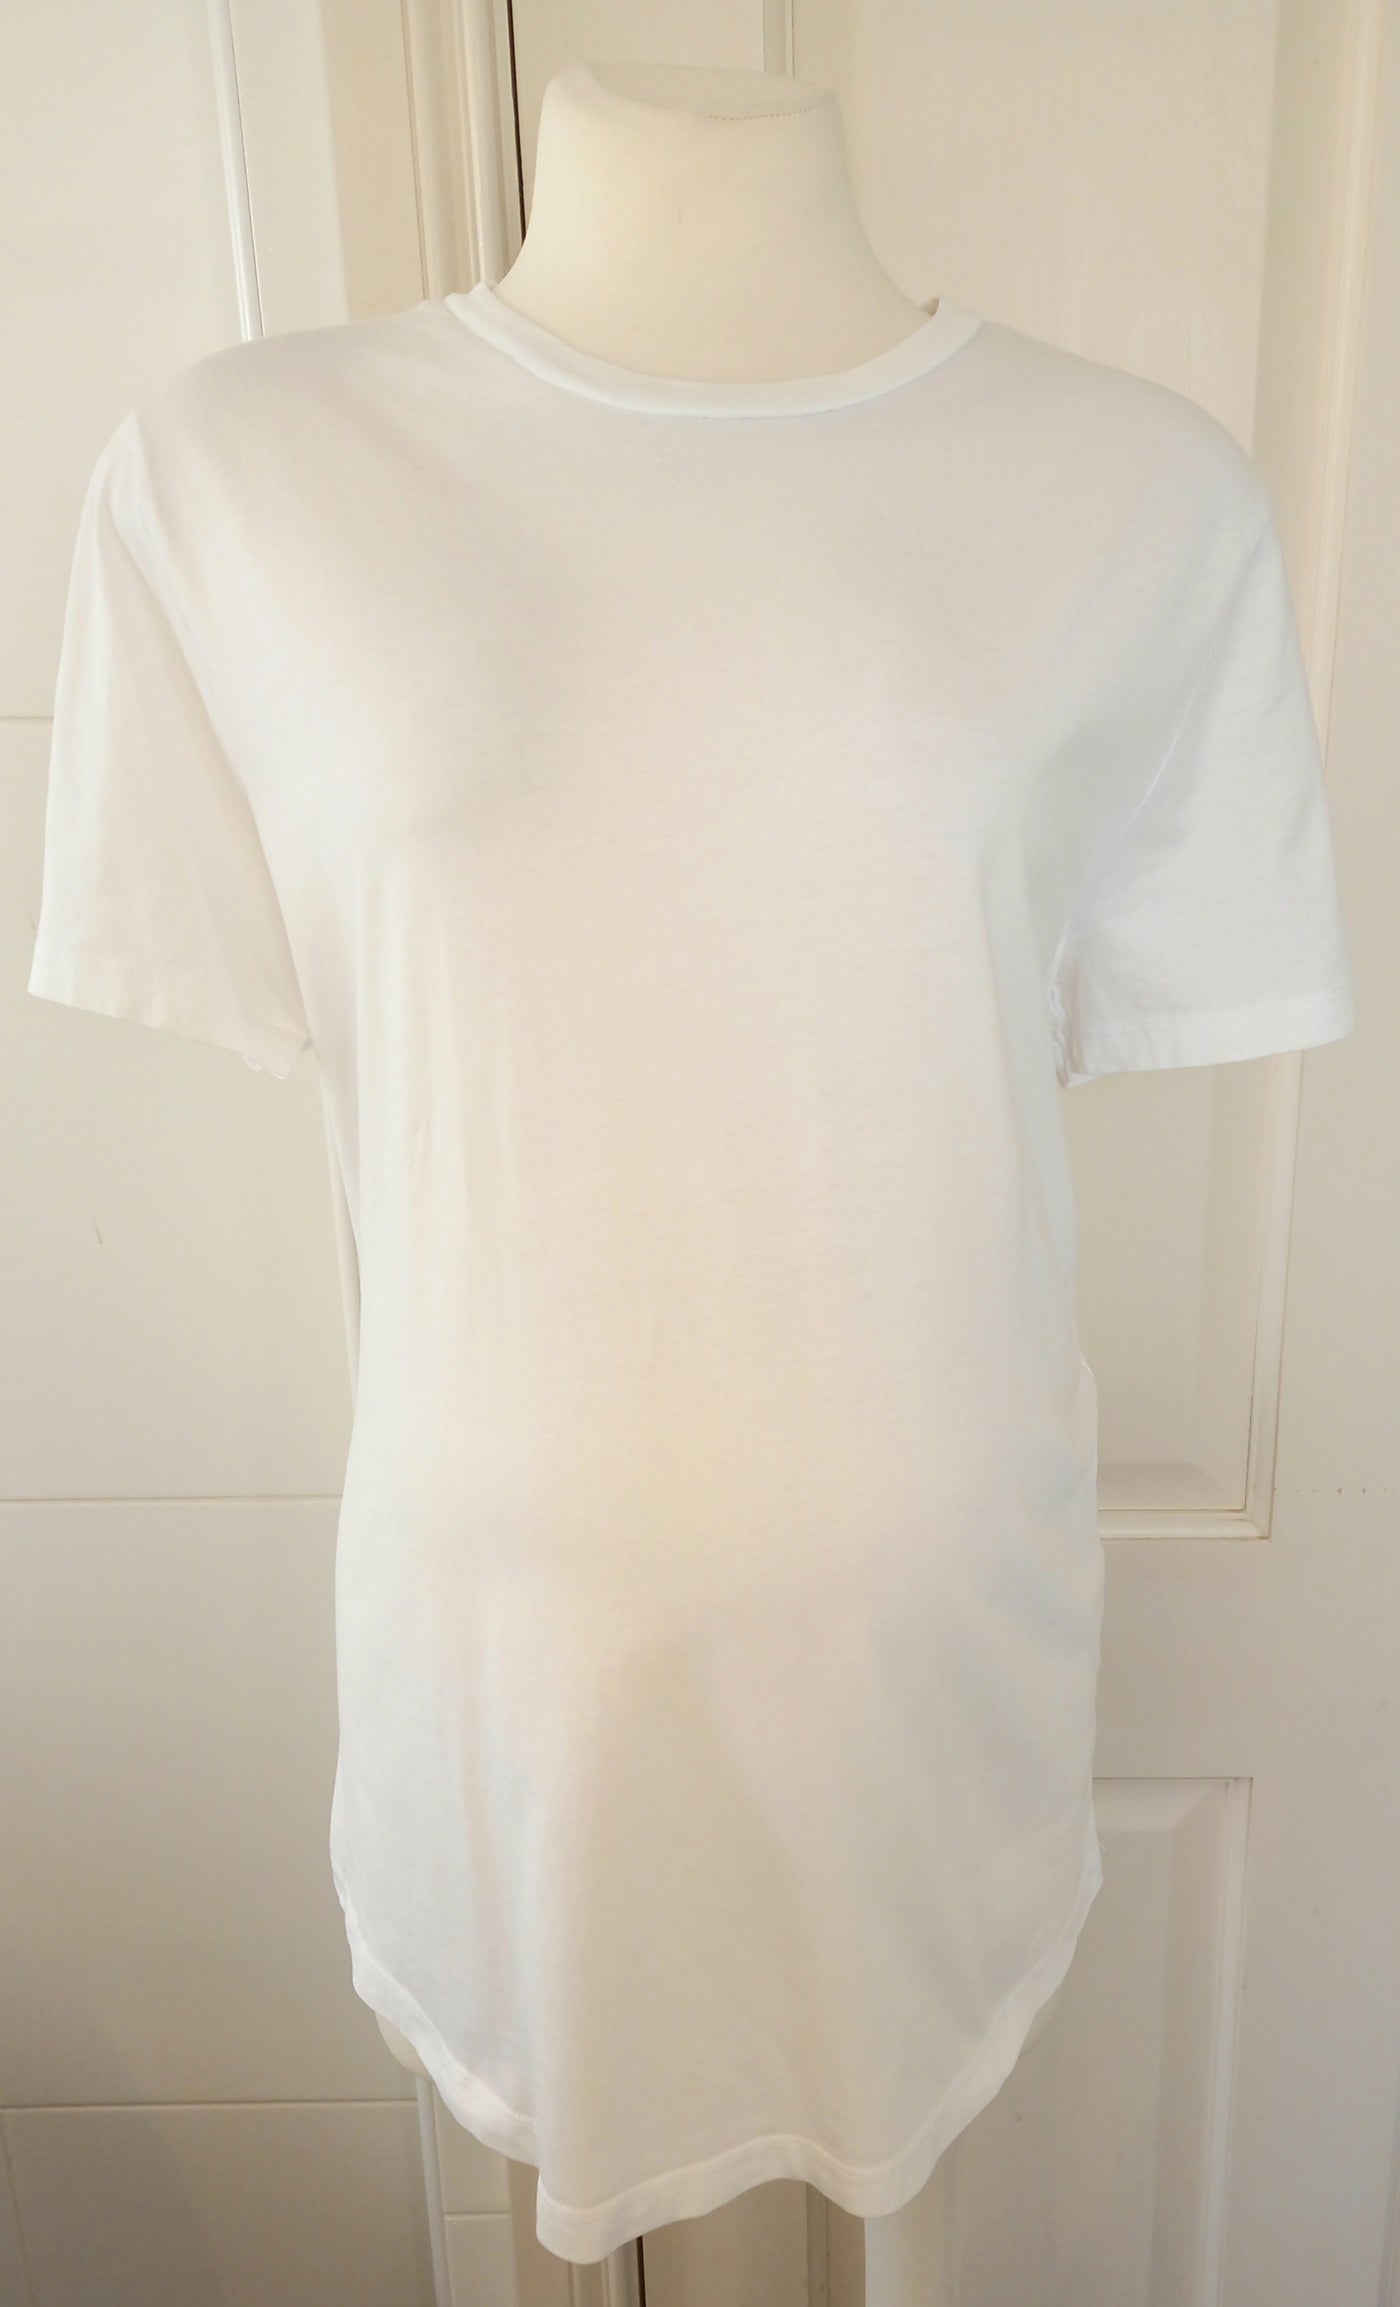 Asos Maternity White T-Shirt Top - Size 16